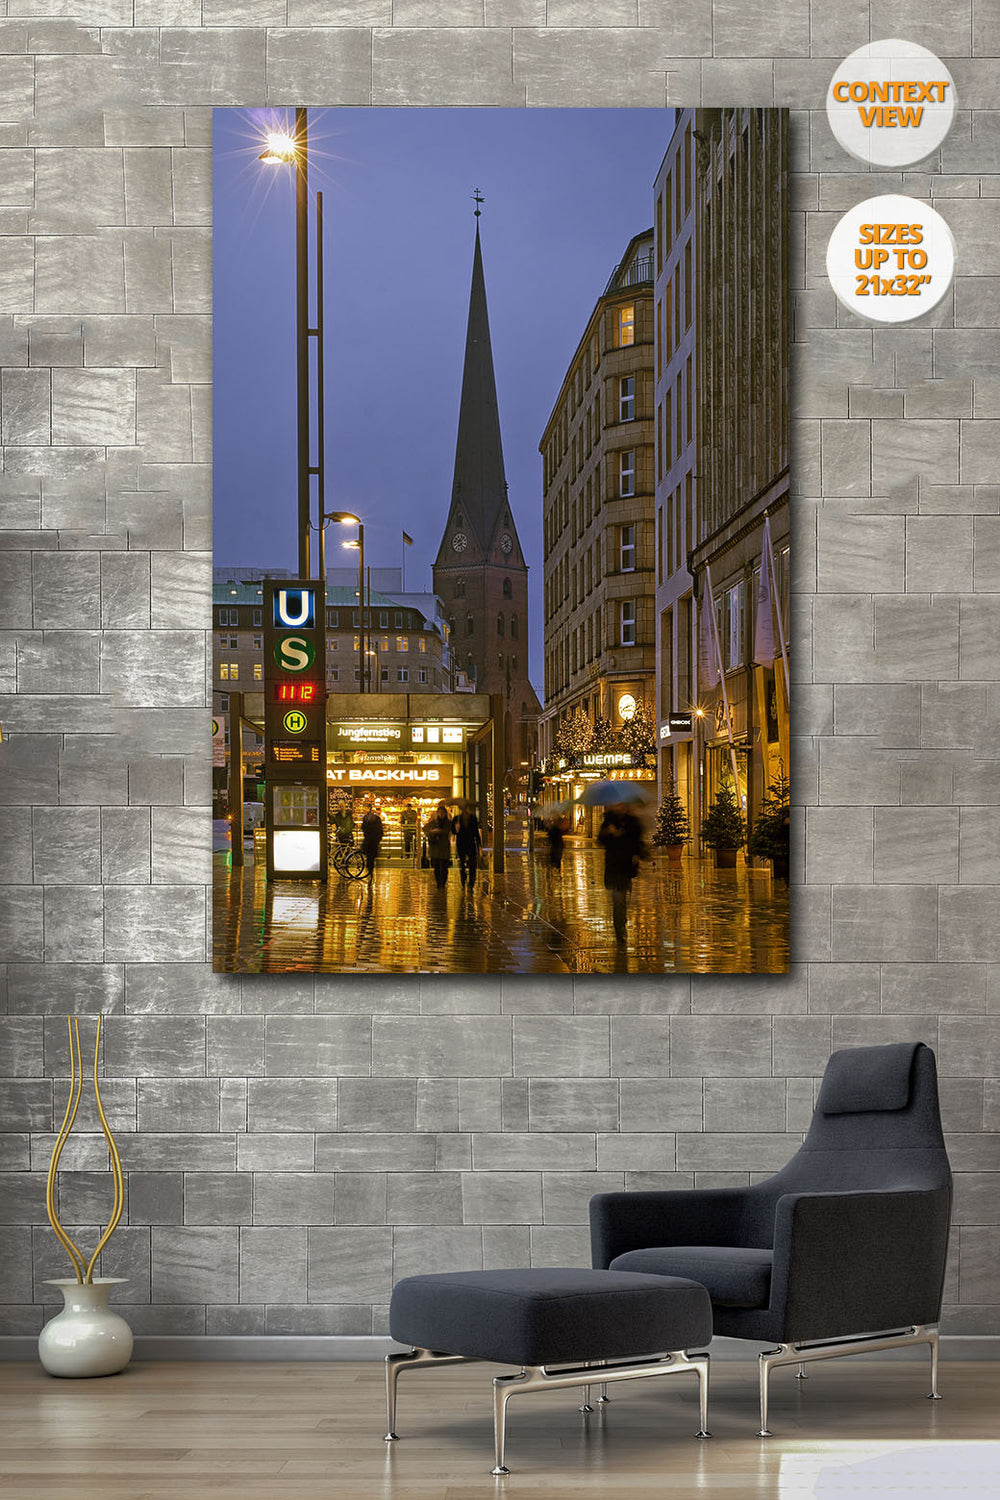 Jungfernstieg, Hamburg, Germany. | View of the Print hanged in Living Room.